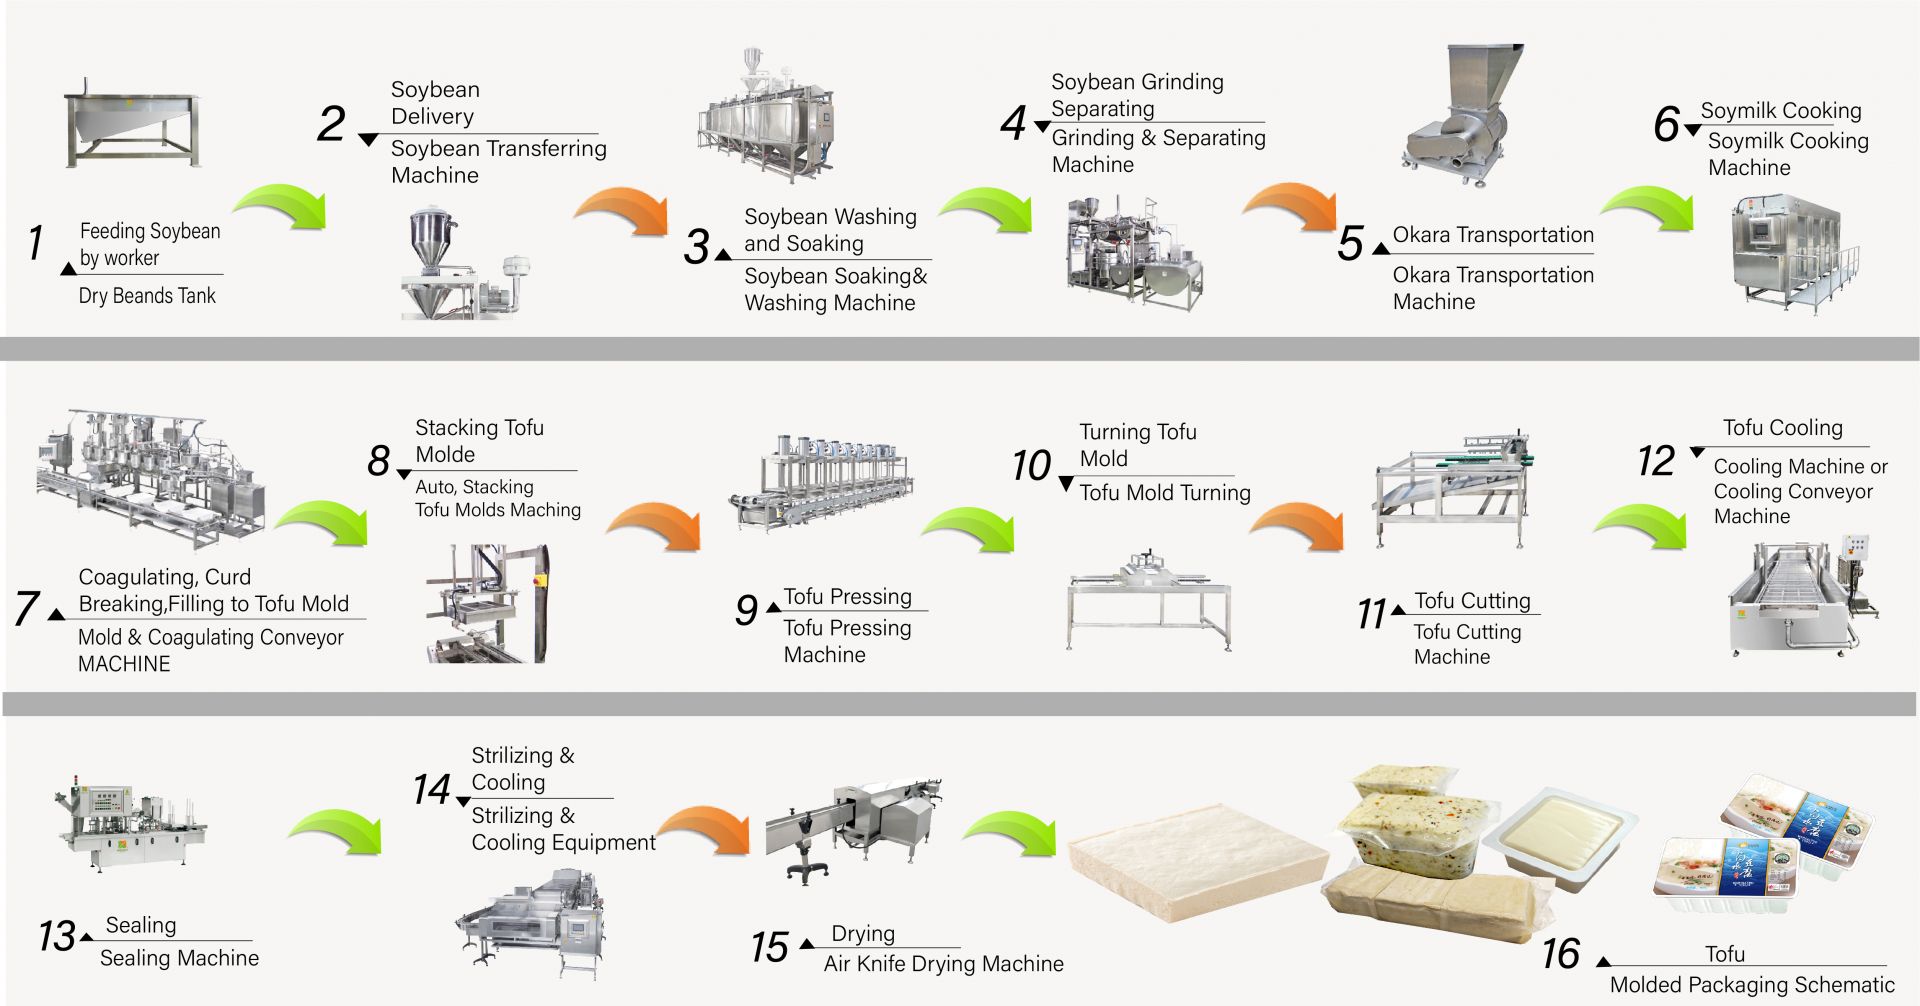 Hvordan lage tofu, produksjon av tofu, Tofu-produksjon, Tofu-produksjonsprosess, tofu-produksjon, tofu-produksjonsprosess, tofu-prosess, tofu-behandlingsmetode, Tofu-behandlingsprosess, tofu-produksjon, tofu produksjonsflytskjema, tofu produksjonsprosess, Tofu produksjonsprosess, automatisk tofu-maskin, Automatisk tofu-maskin, Kommersiell tofu-maskin, Enkel tofu-maker, Stekt tofu-maskin, Industriell tofu-produksjon, Soyamatutstyr, soyamelmaskin, soya melk og tofu produksjonsmaskin, tofu utstyr, tofu fabrikk, tofu maskin, tofu maskin til salgs, tofu maskin produsent, tofu maskin produsent, tofu maskin pris, Tofu maskineri, Tofu-maskiner og utstyr, Tofu-maker, tofu-maker maskin, Tofu-produksjon, tofu-produksjonsutstyr, tofu-produksjonsmaskin, pris for tofu-produksjonsmaskin, tofu-produsenter, Tofu-produksjon, tofu-produksjonsutstyr, Tofu produksjonsfabrikk, tofu produksjonsanlegg, Tofu produksjonsutstyr, Tofu produksjonsfabrikk, tofu produksjonslinje, Tofu produksjonslinje pris, tofumaker, Vegansk kjøttmaskin, Vegansk kjøttproduksjonslinje, Grønnsakstofu maskineri og utstyr